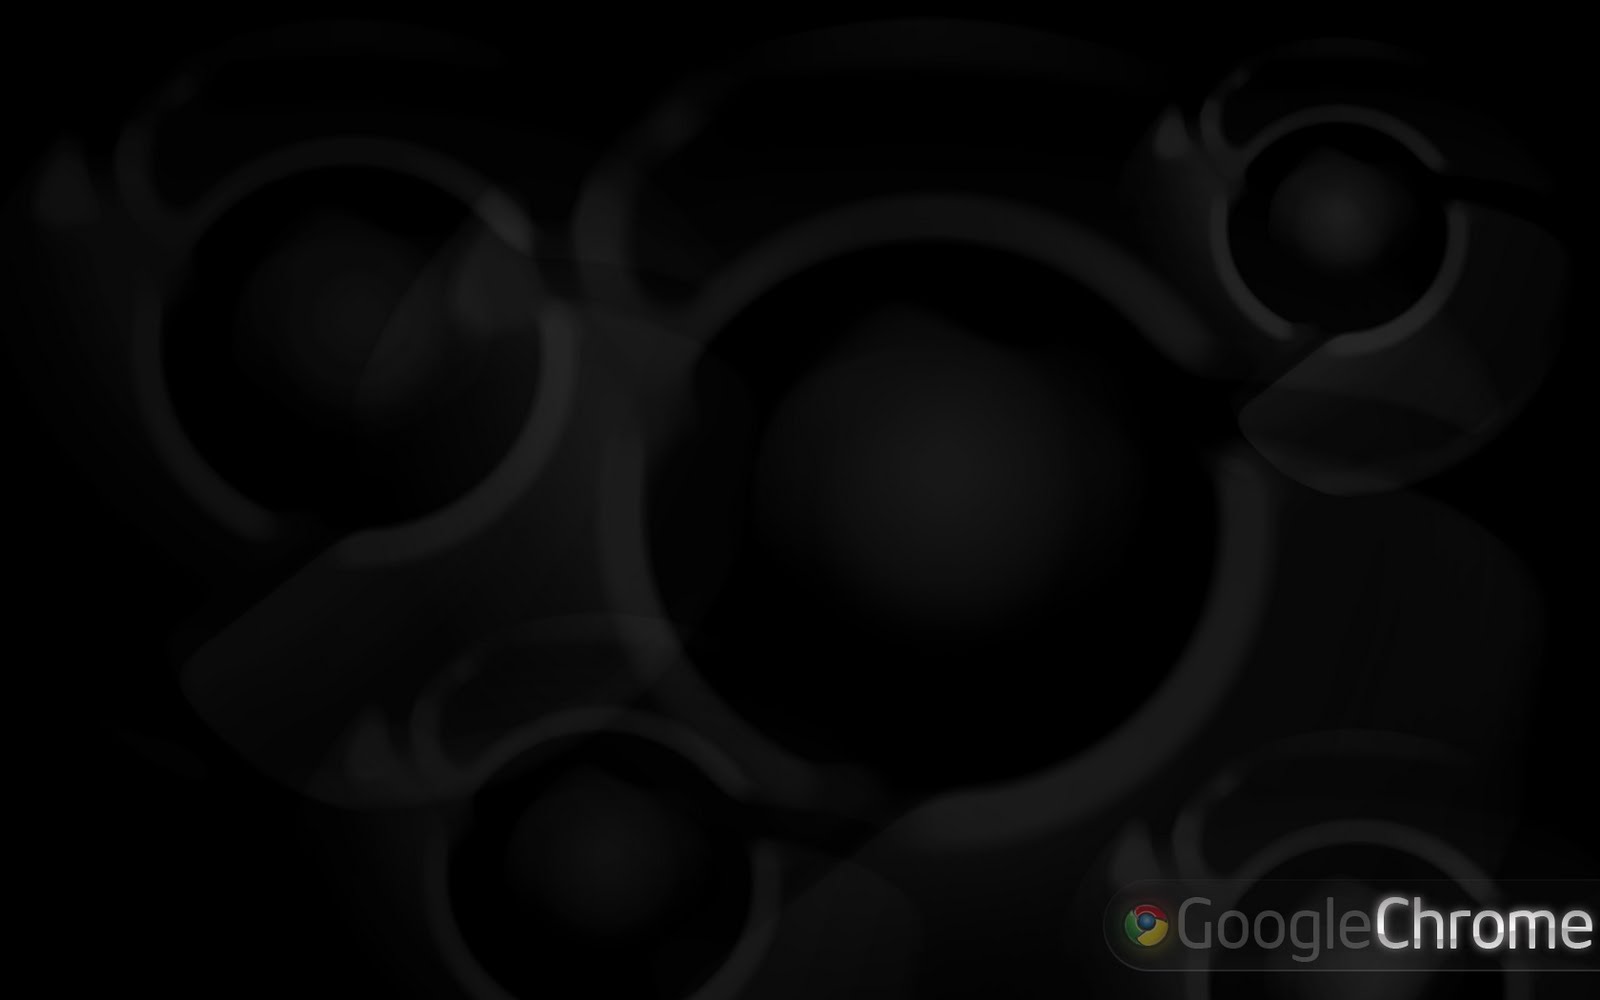 Wallpapers Logo: Wallpapers black Google Chrome logo